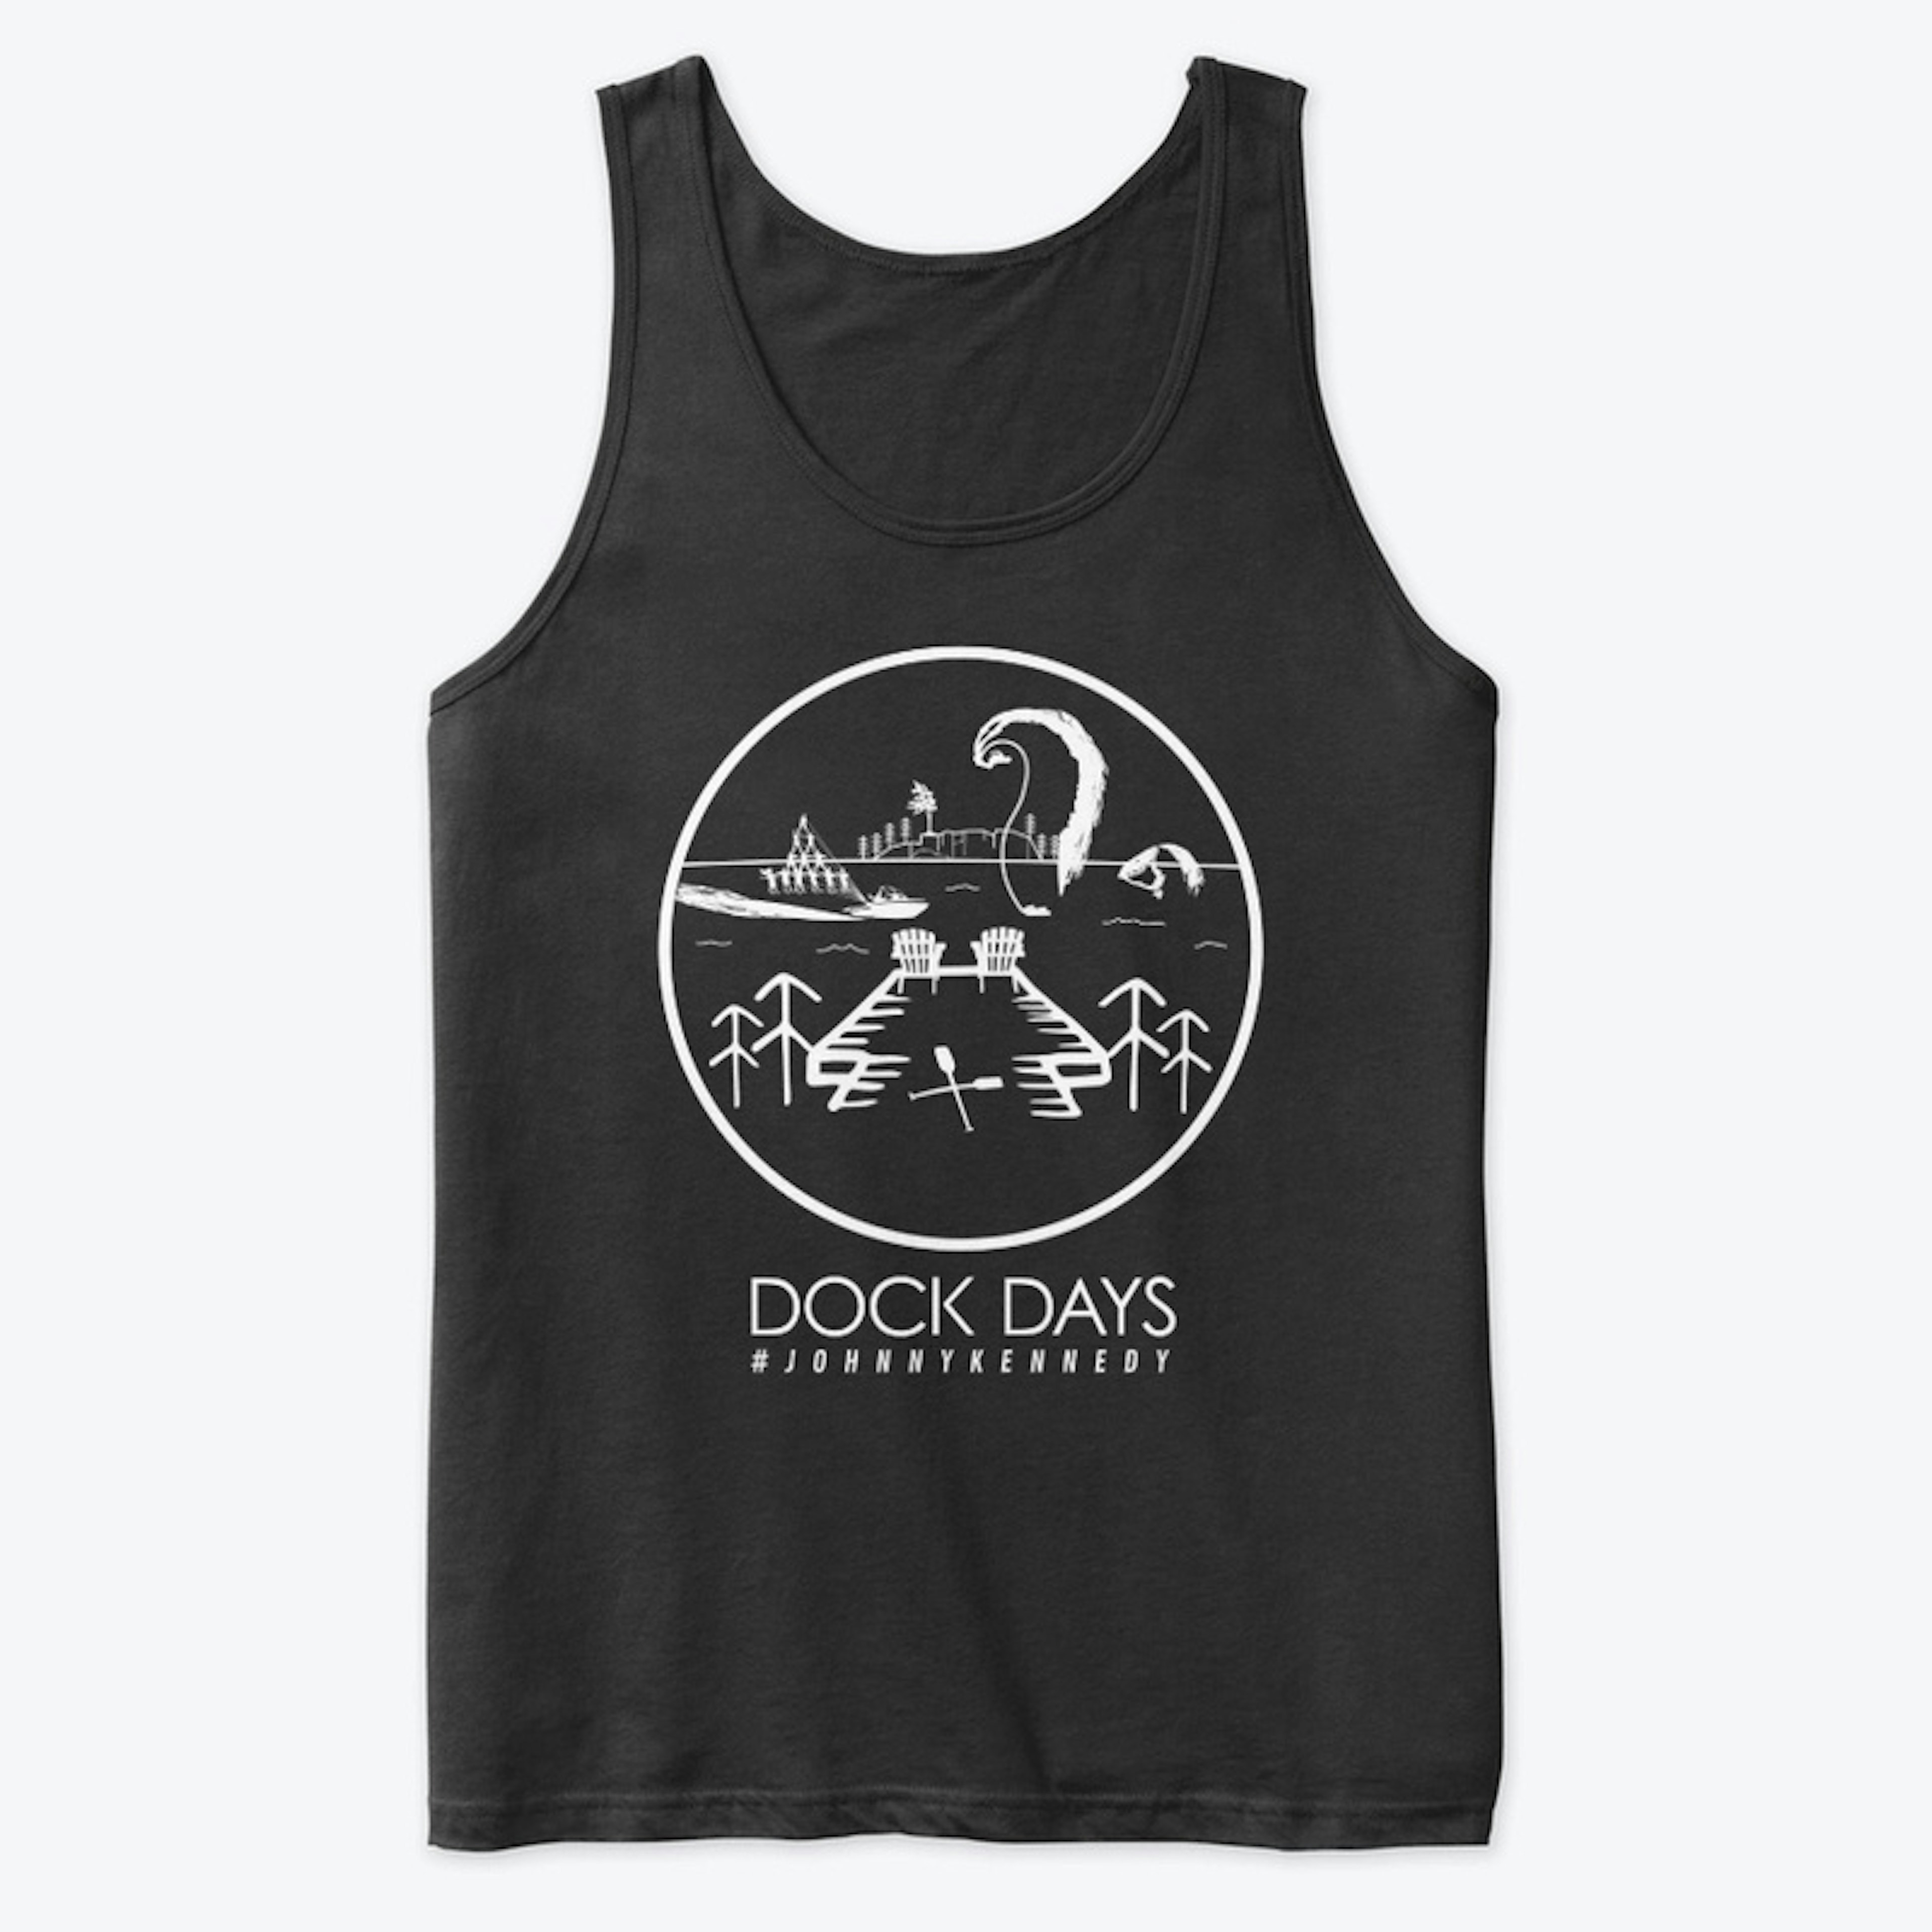 Dock Days Tank Top (Unisex)